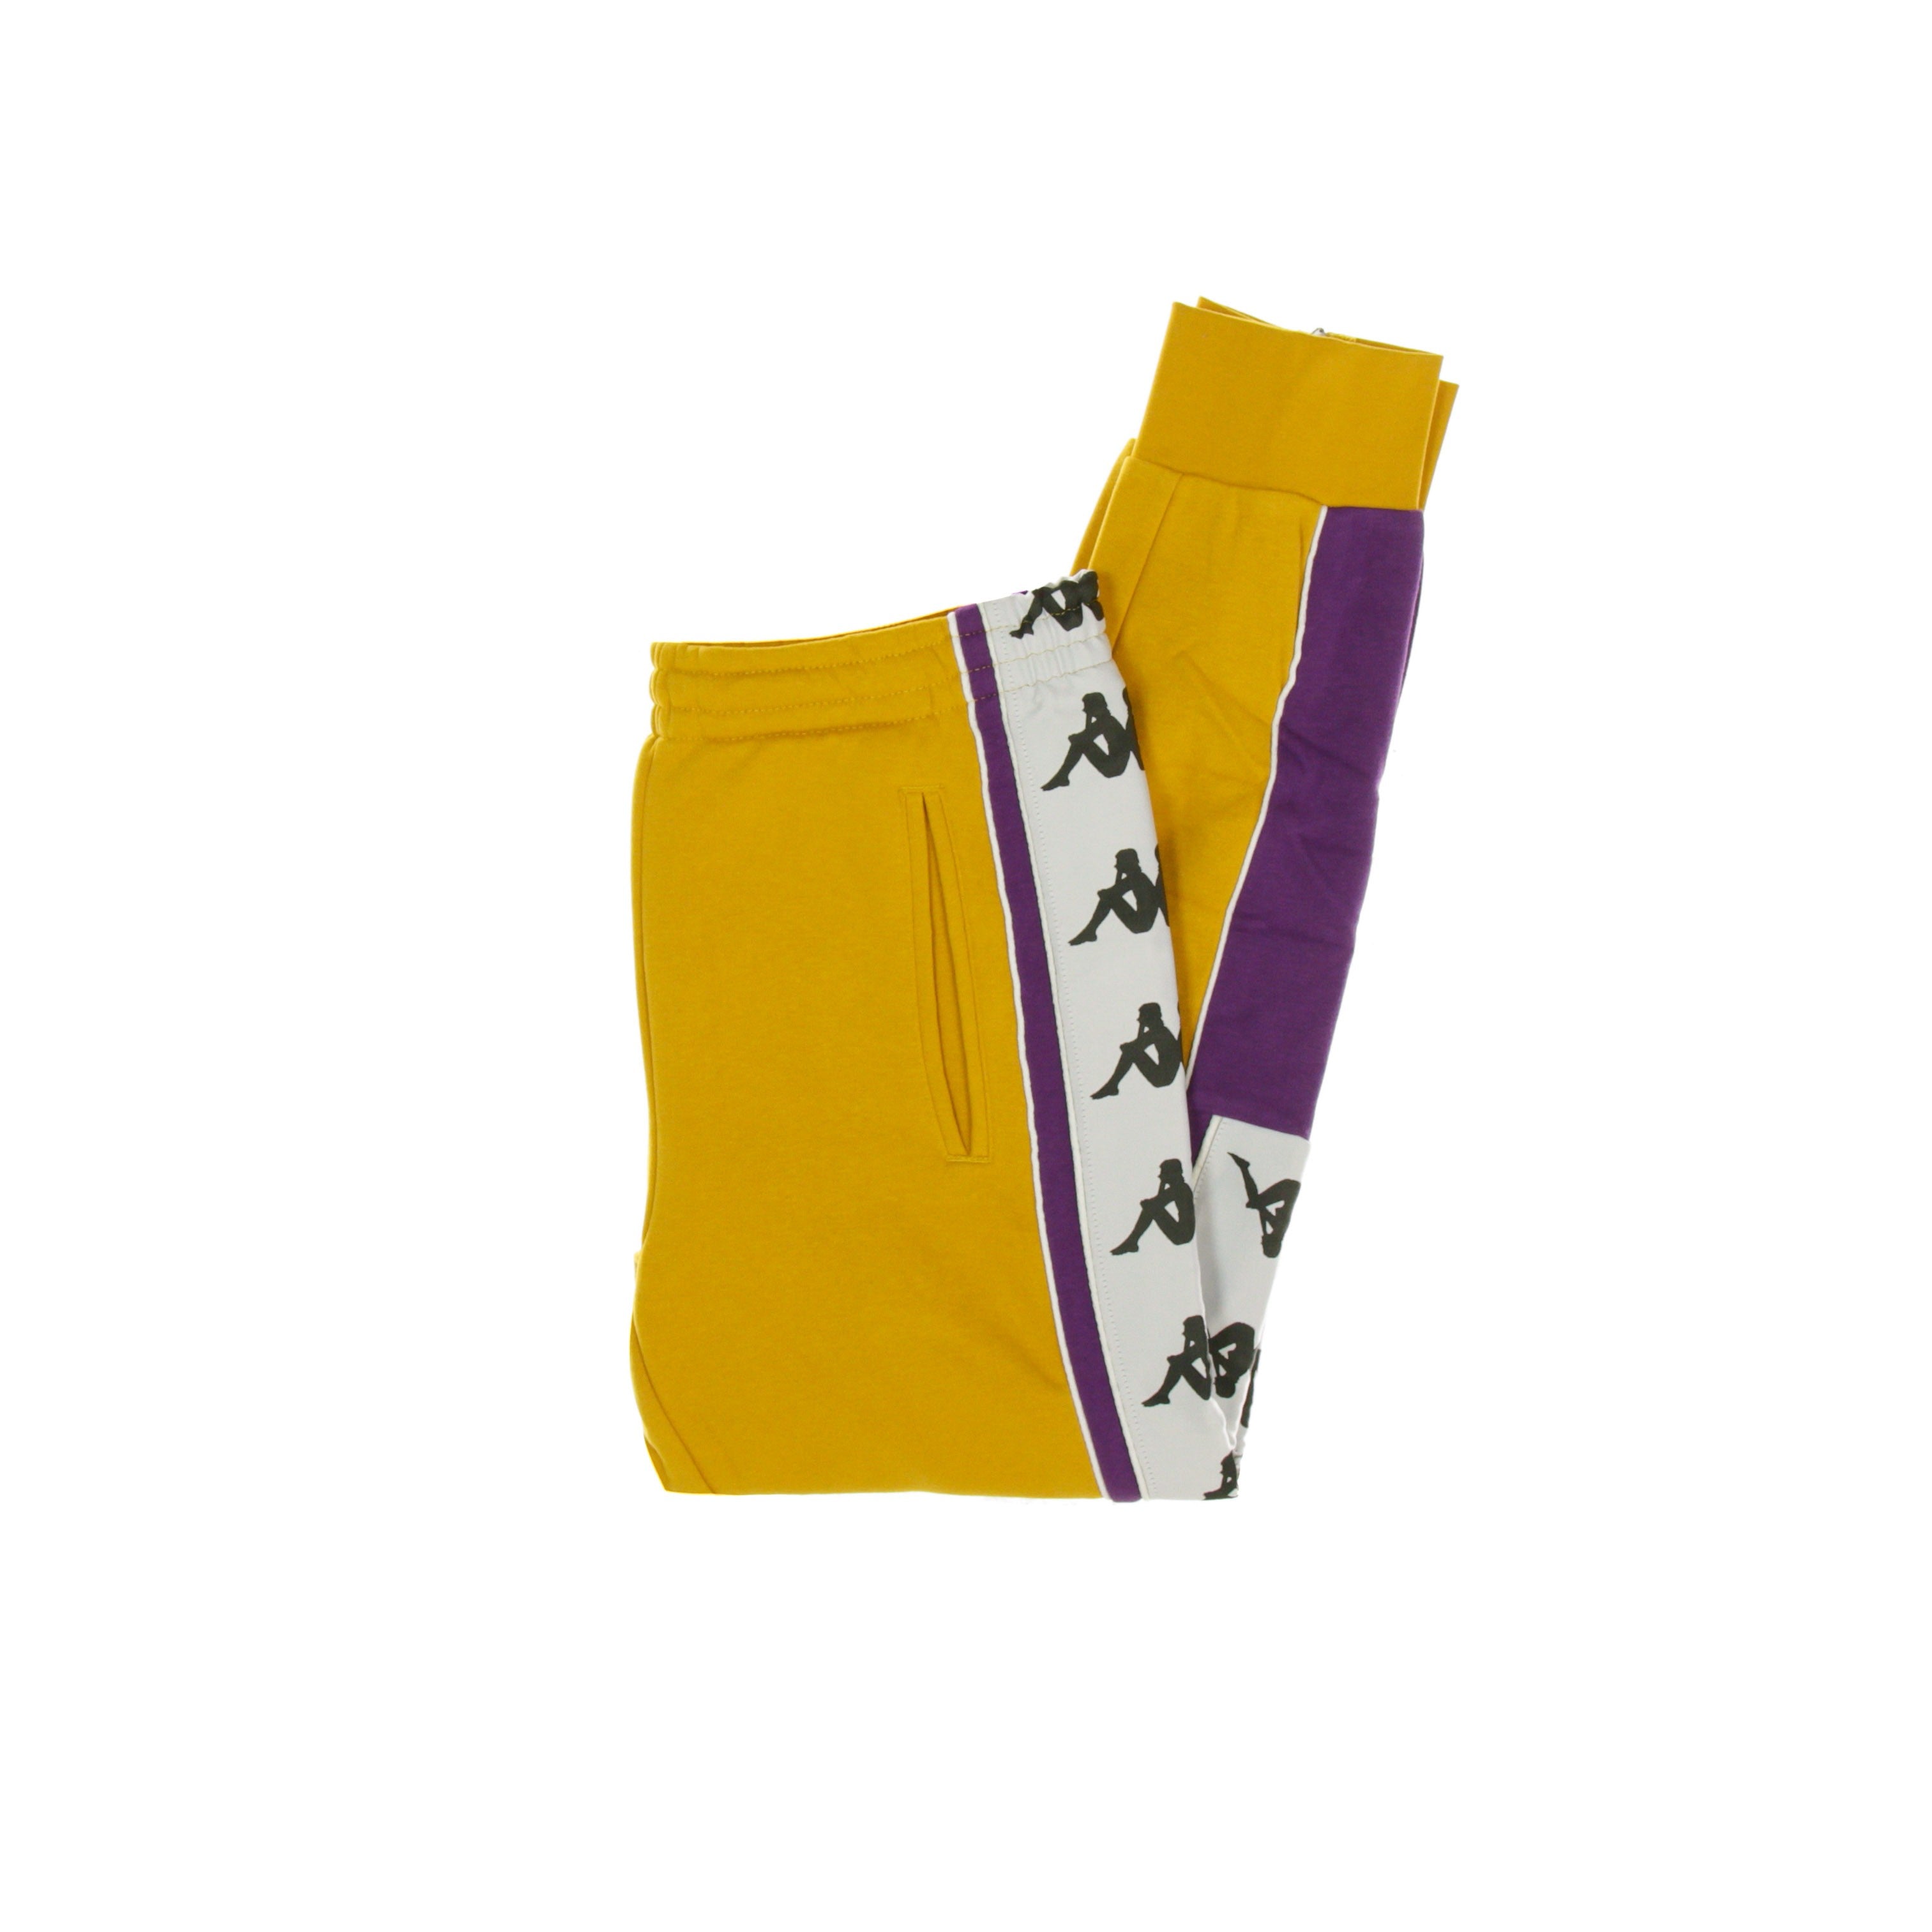 Banda 10 Delaz Men's Fleece Tracksuit Pants Yellow Ochre/violet/white